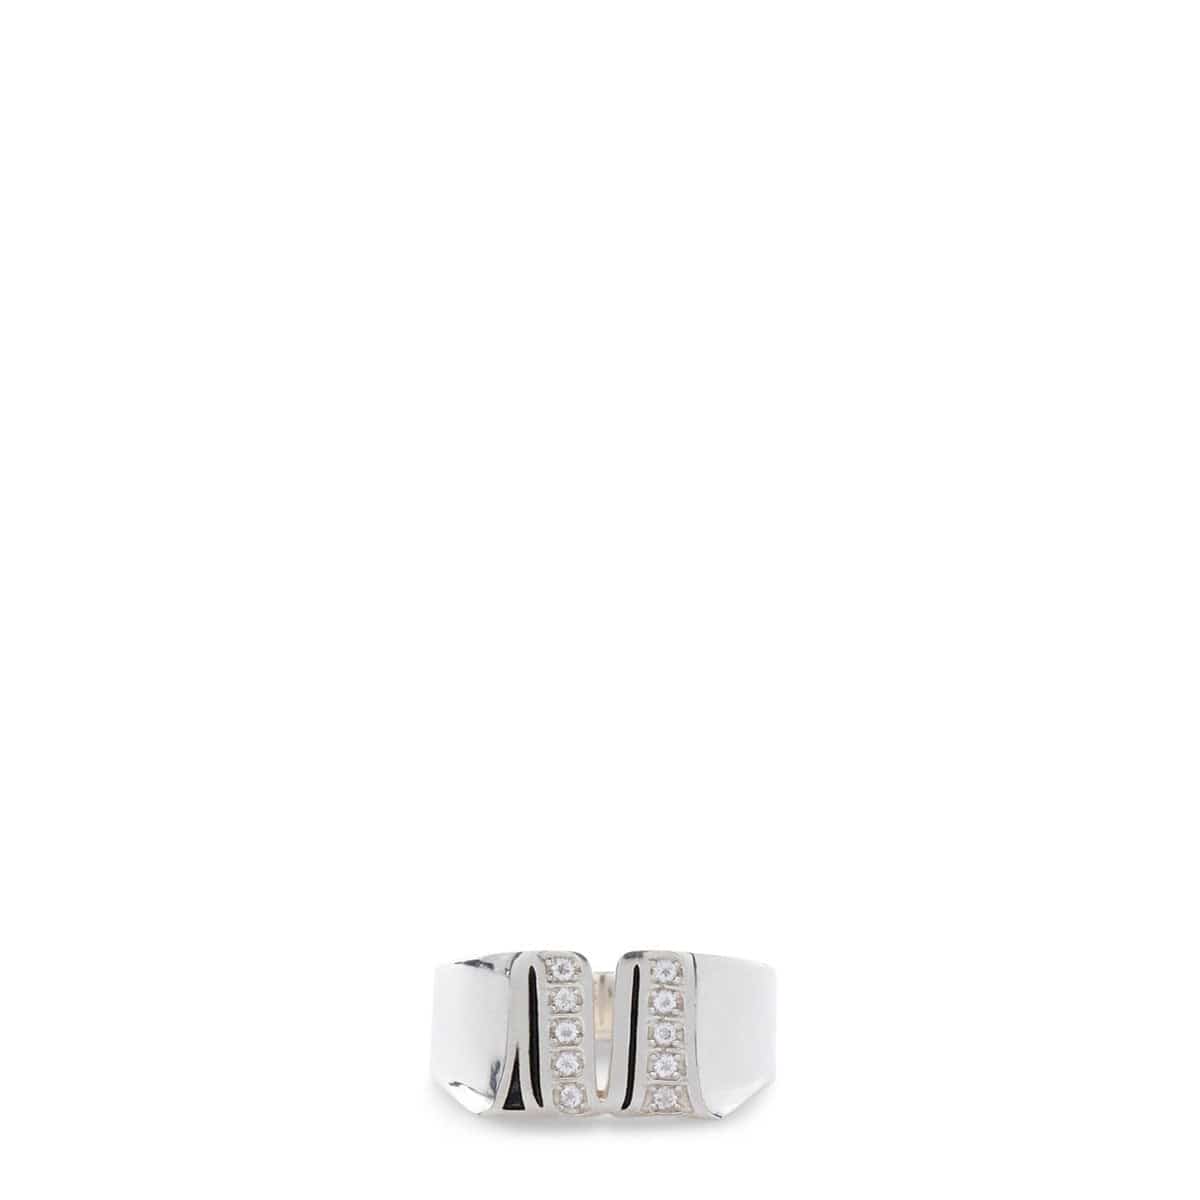 Maple Jewelry "M" SIGNET RING